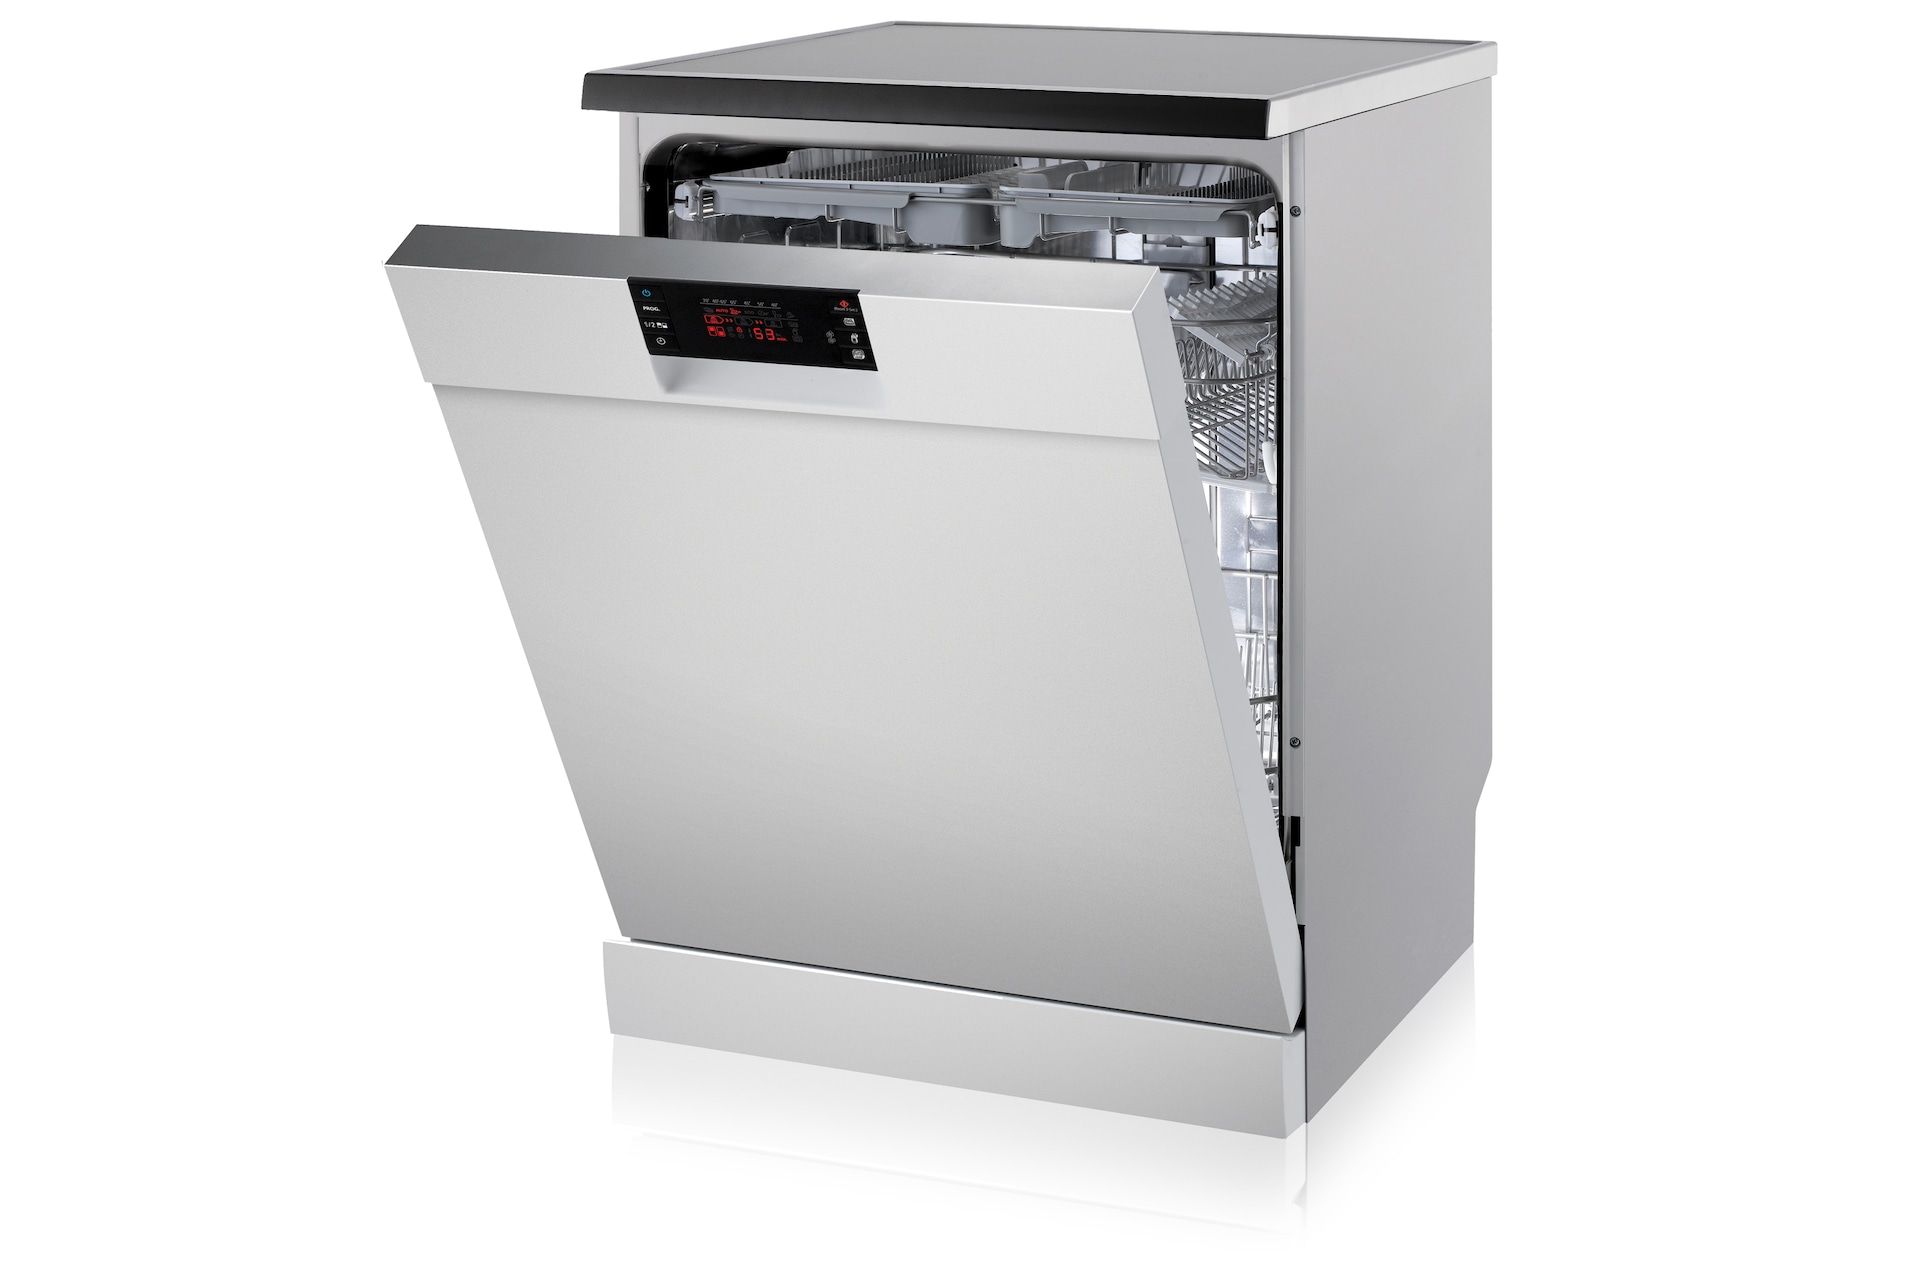 samsung dishwasher model dw80j9945us manual